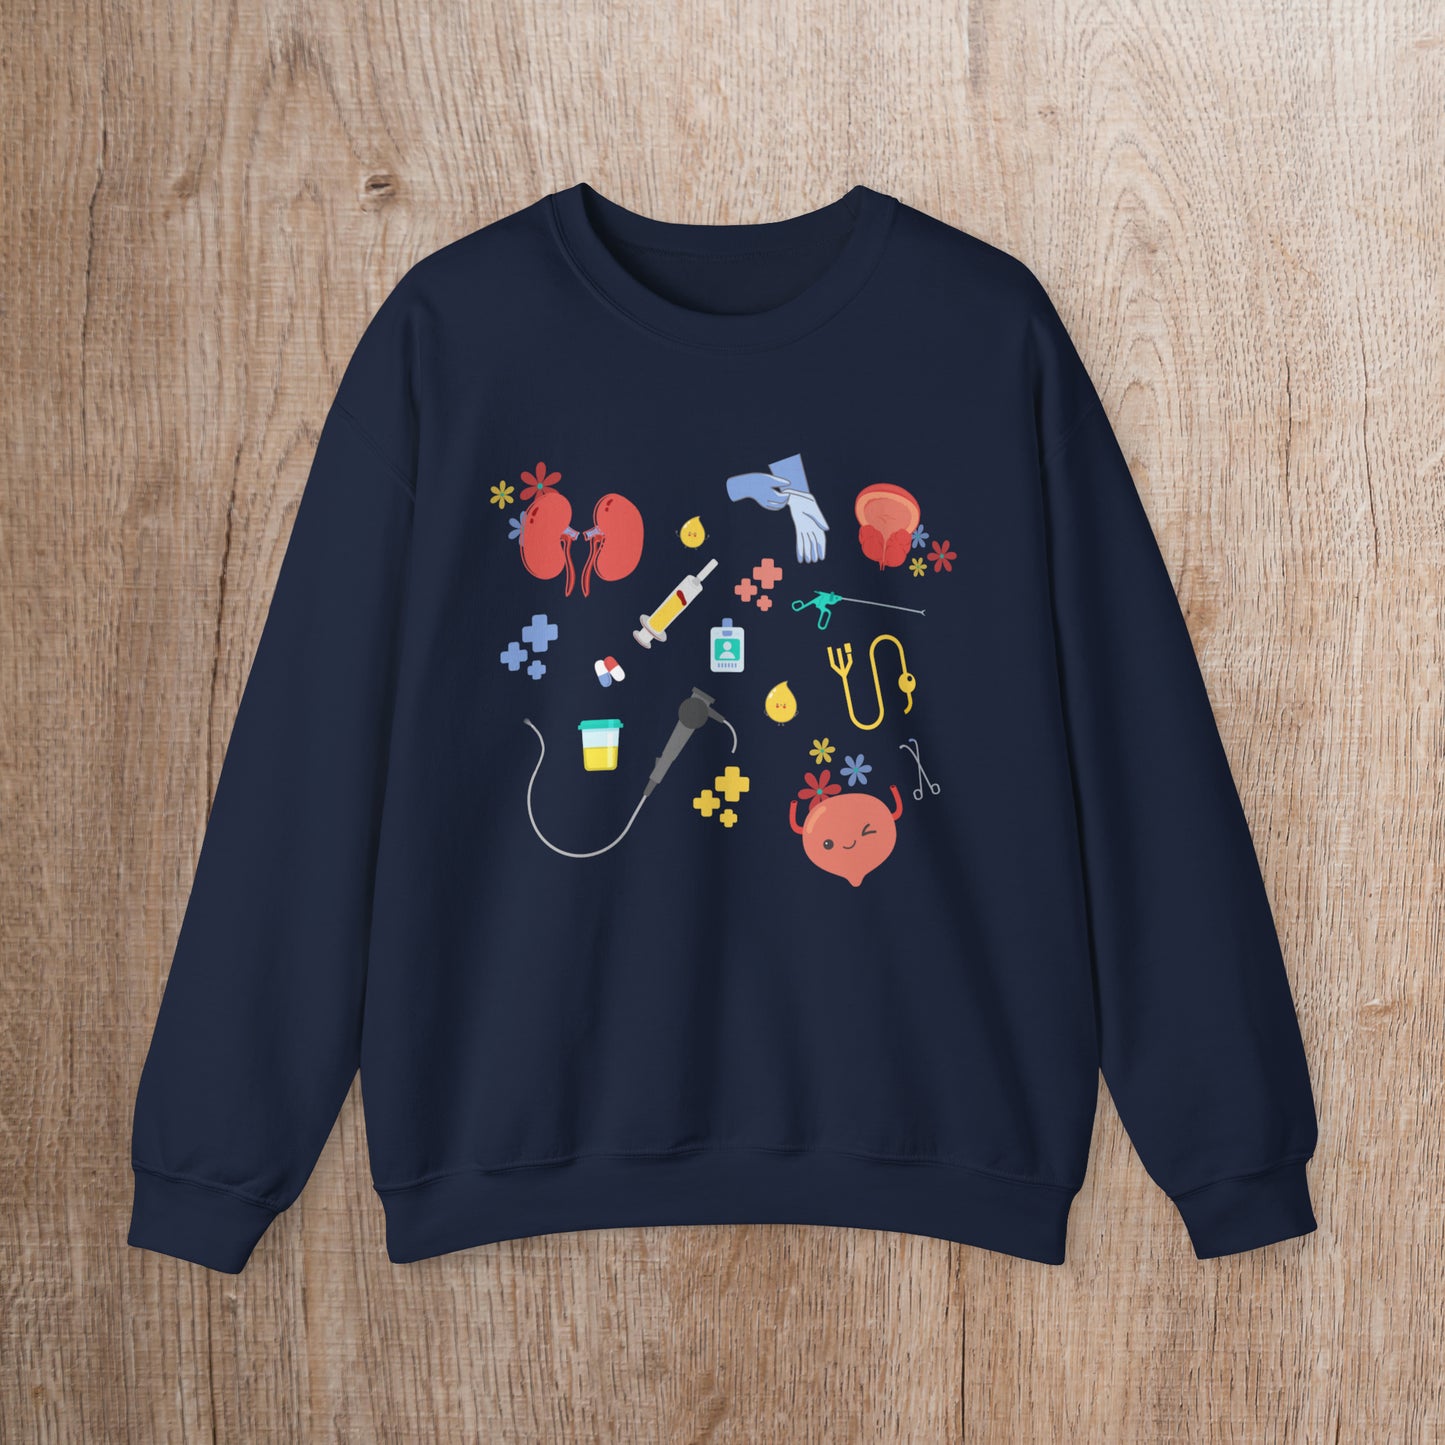 Urology sweater, Urologist Doctor graduation gift, Uro gift idea, Kidney surgeon gift idea, cute medical themed gifts, urology nurse